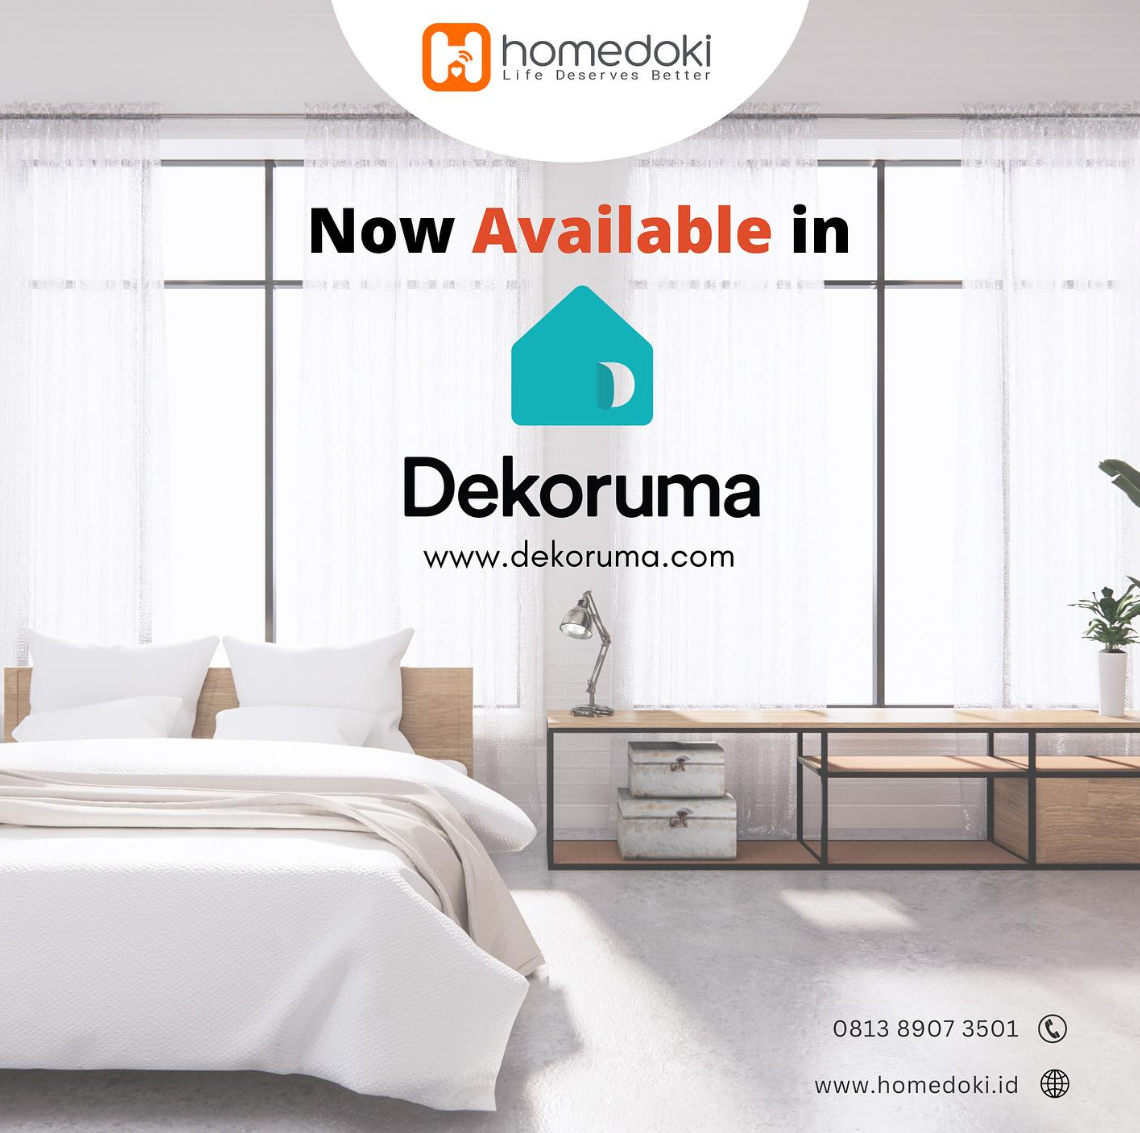 Homedoki Partnered with Dekoruma with Shared Business Vision This Year